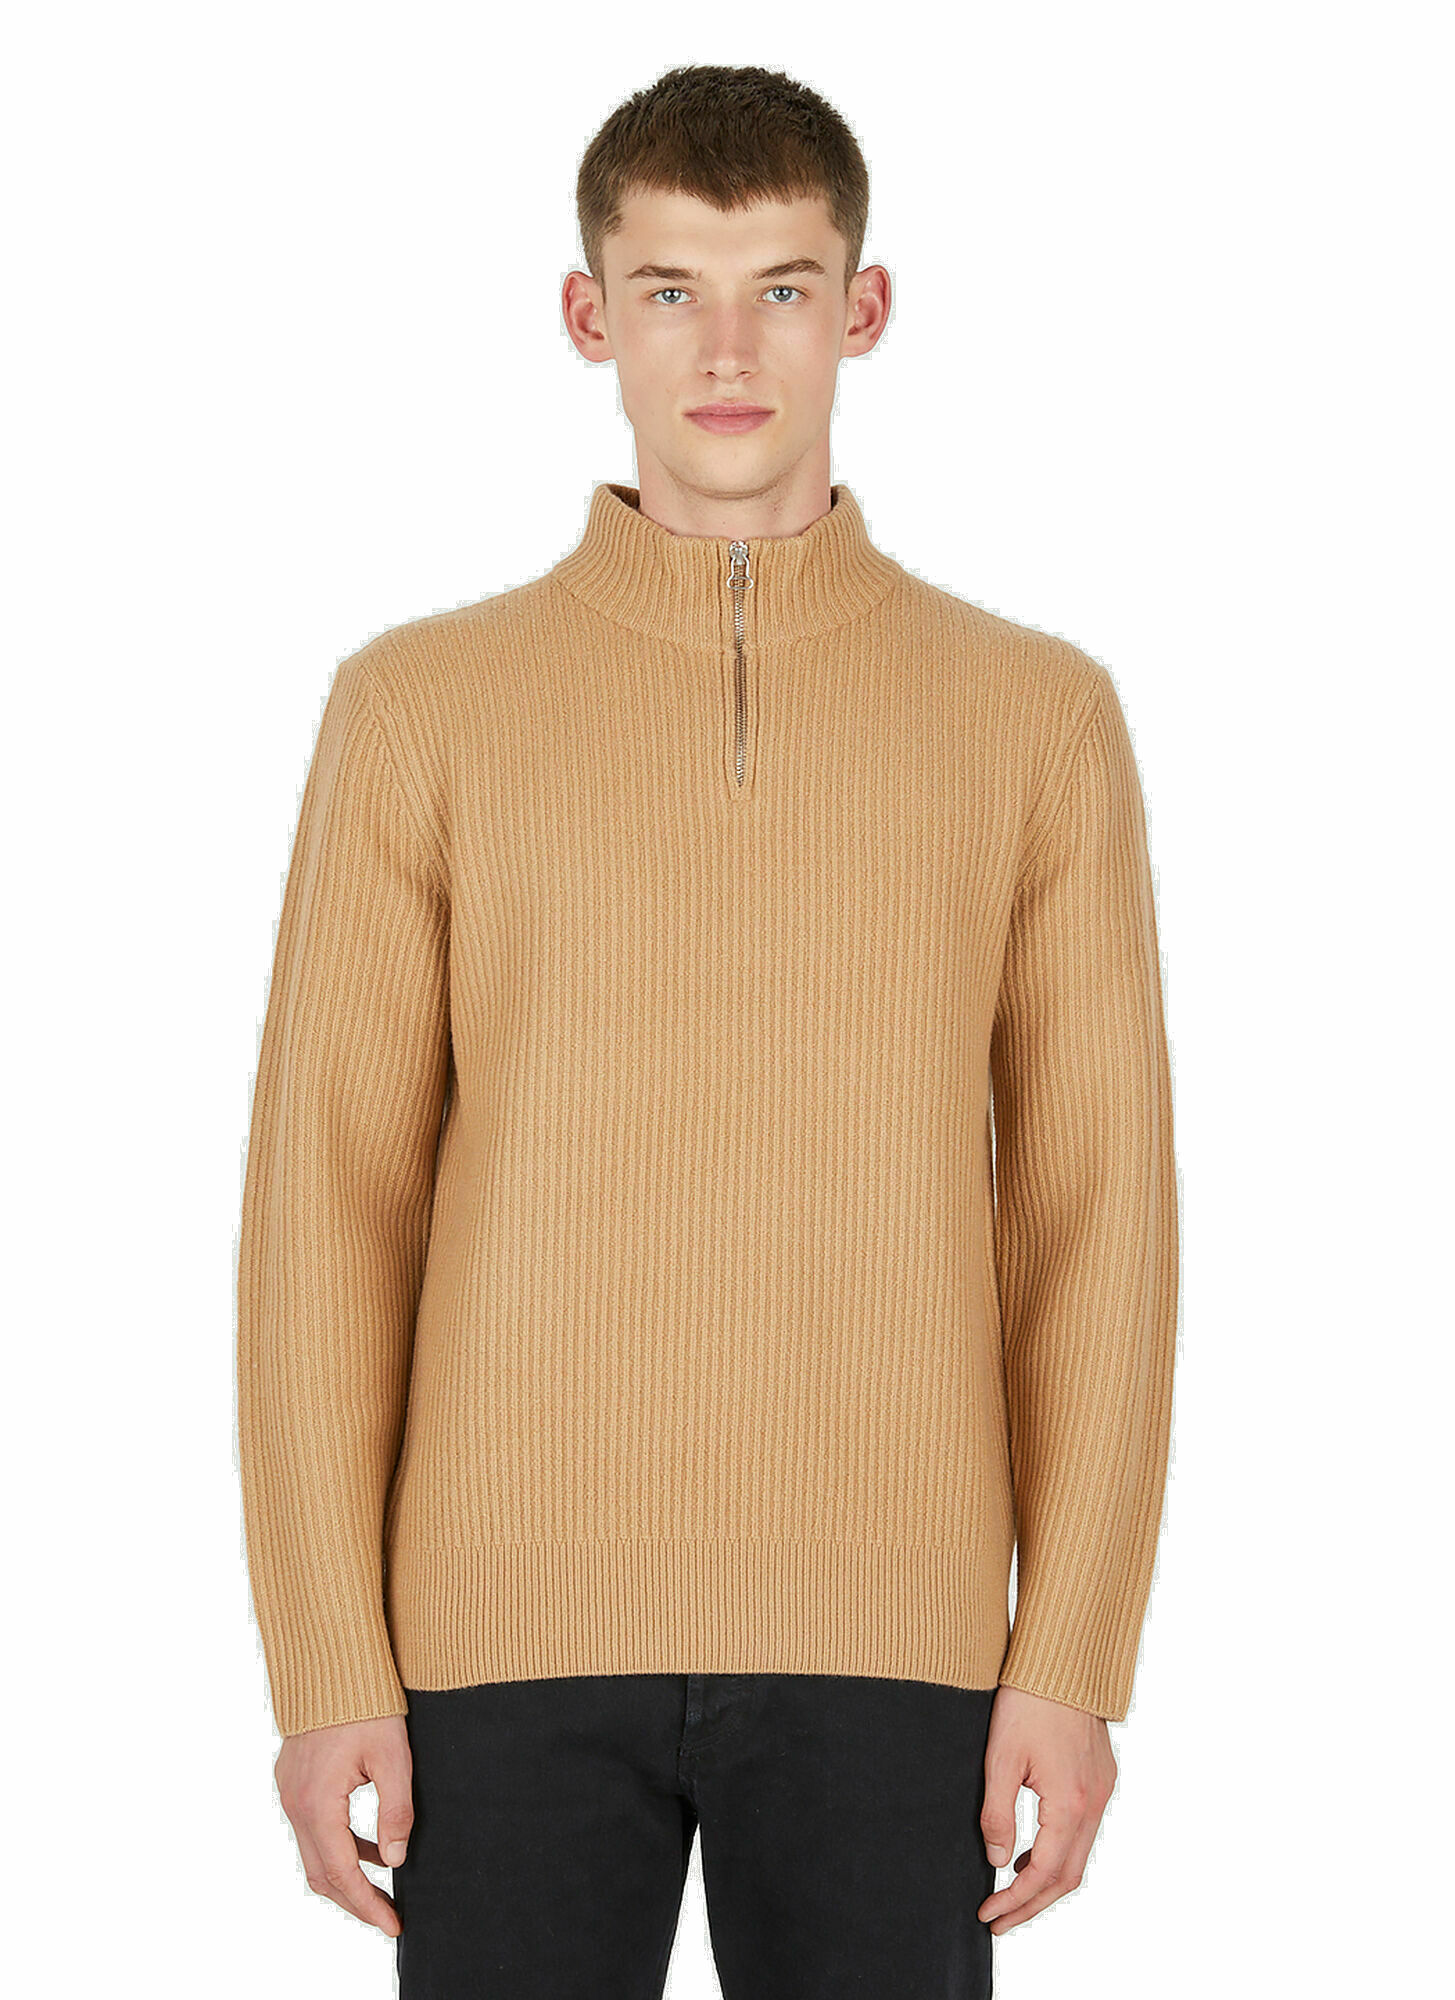 Photo: Alex Zipped Sweater in Brown